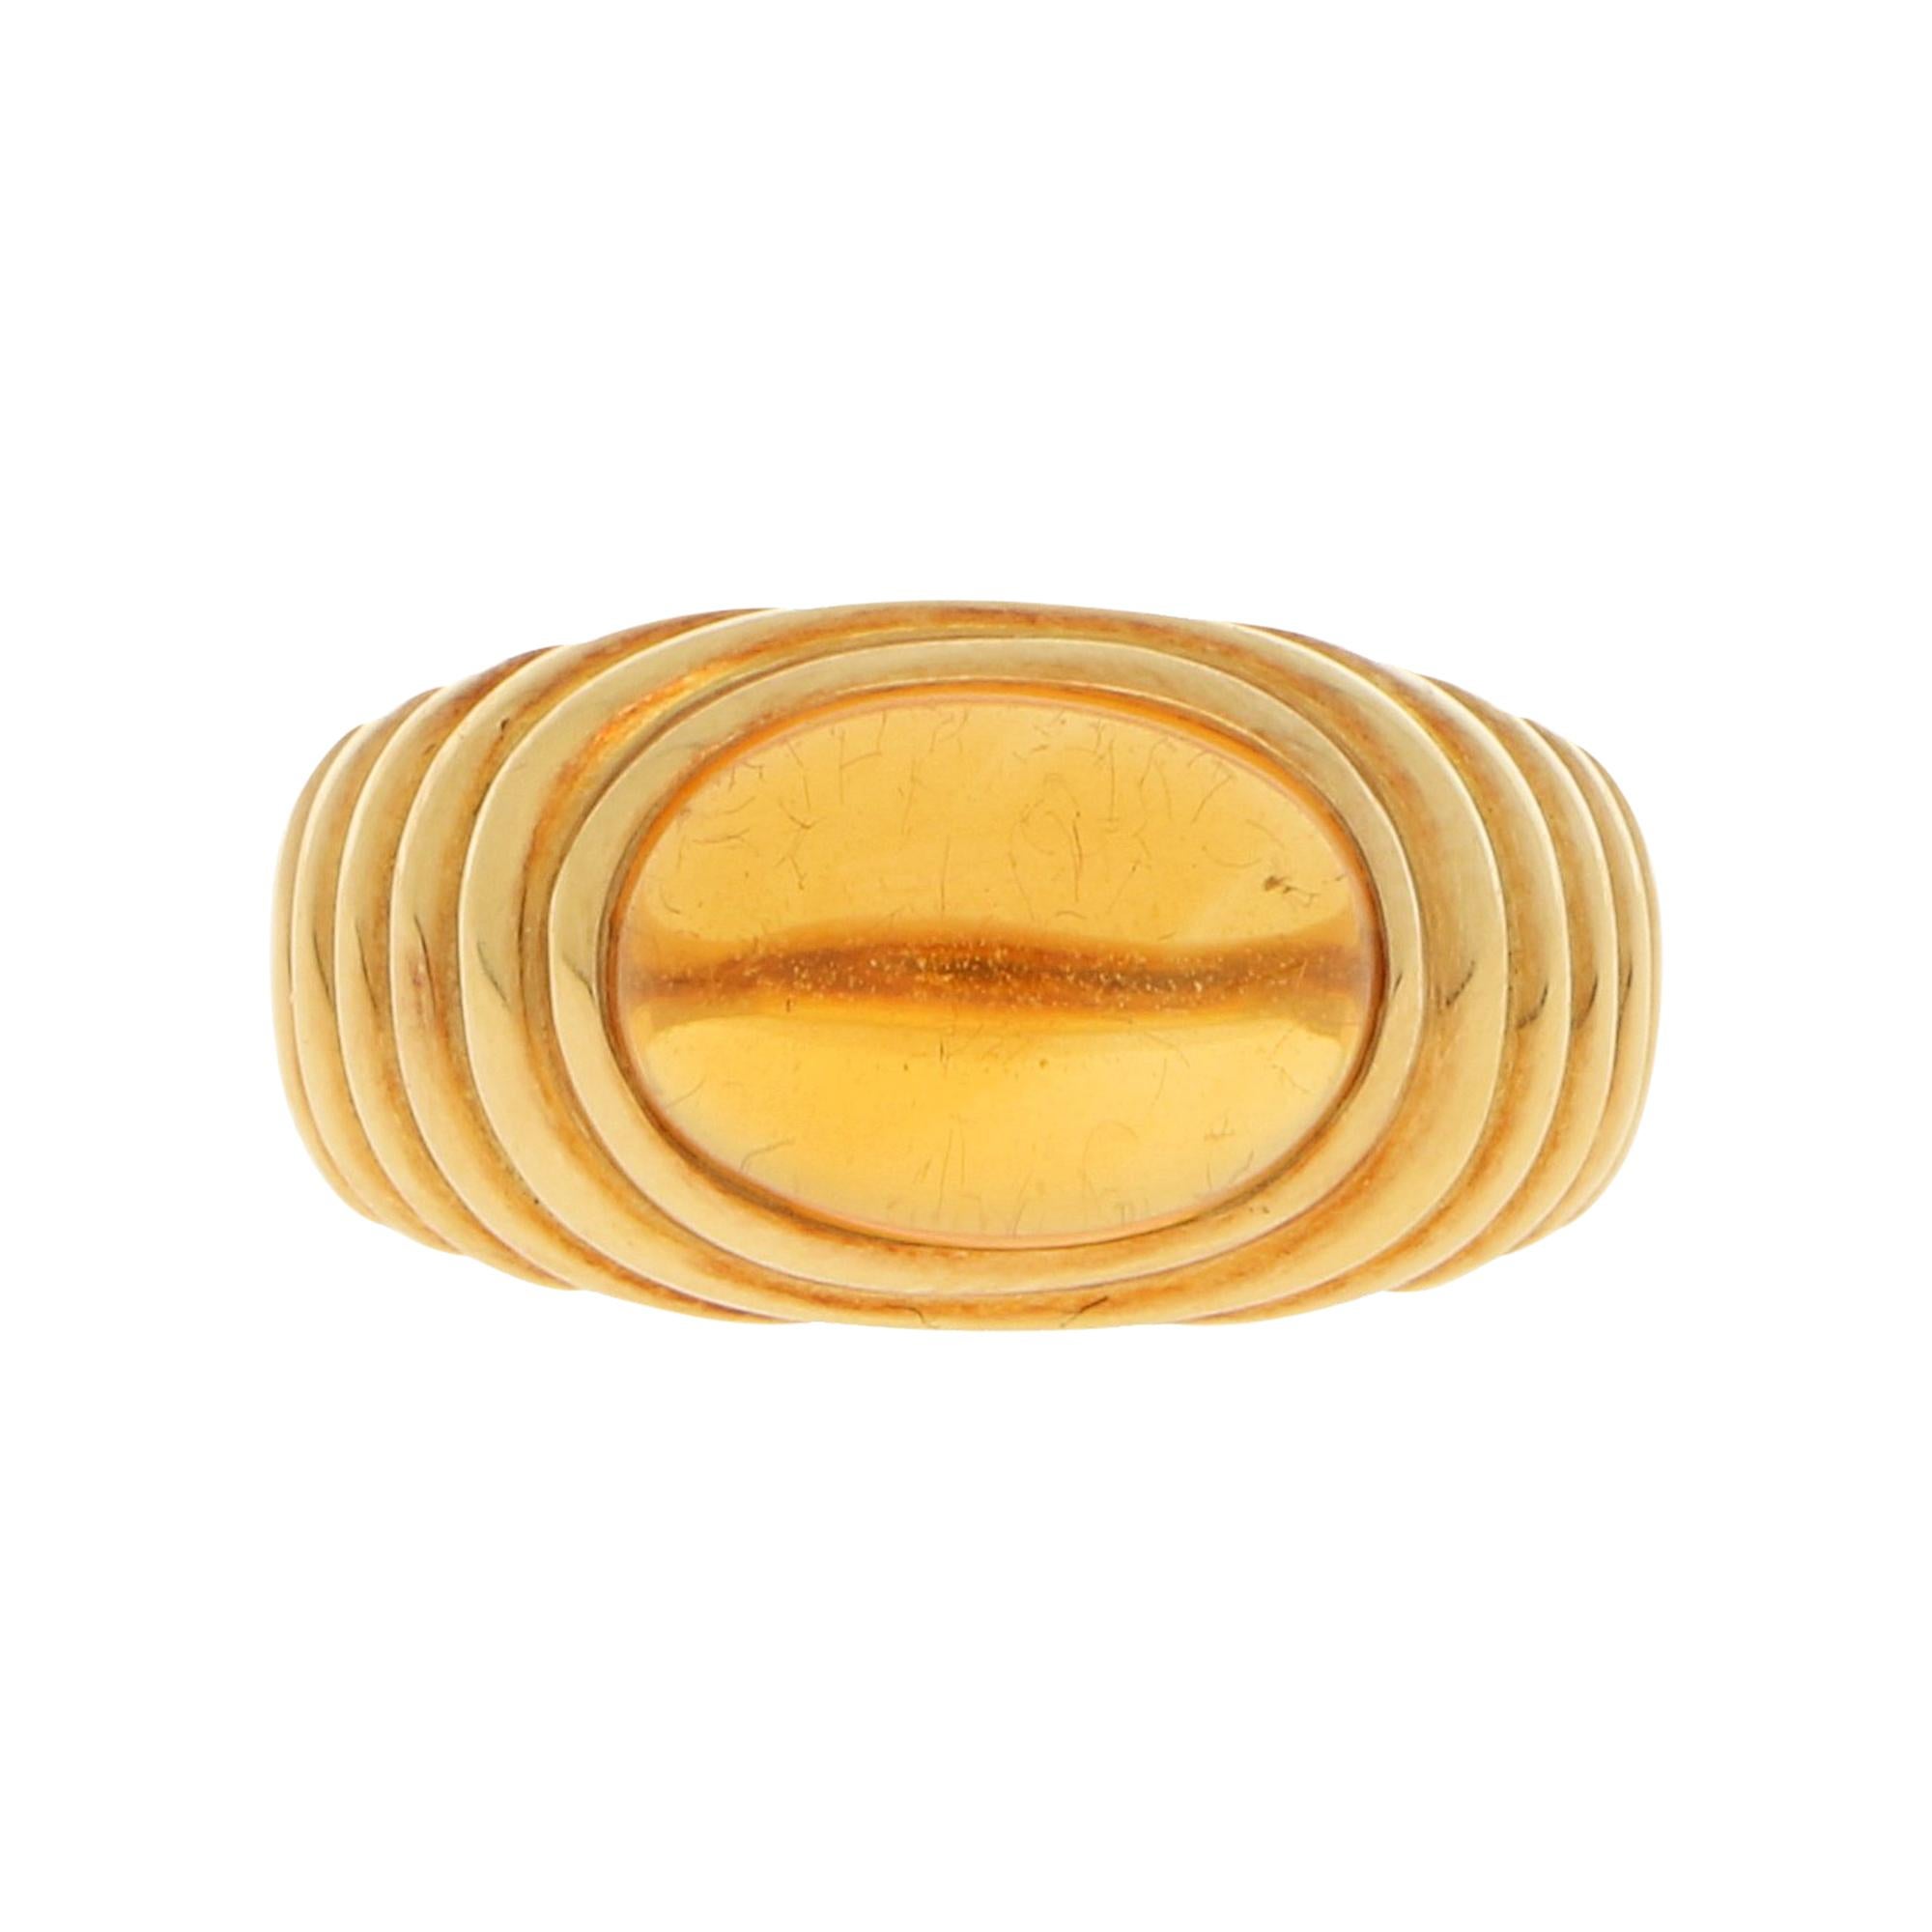 Bvlgari "Bypass" Orange Citrine Dress / Cocktail Ring in 18k Yellow Gold